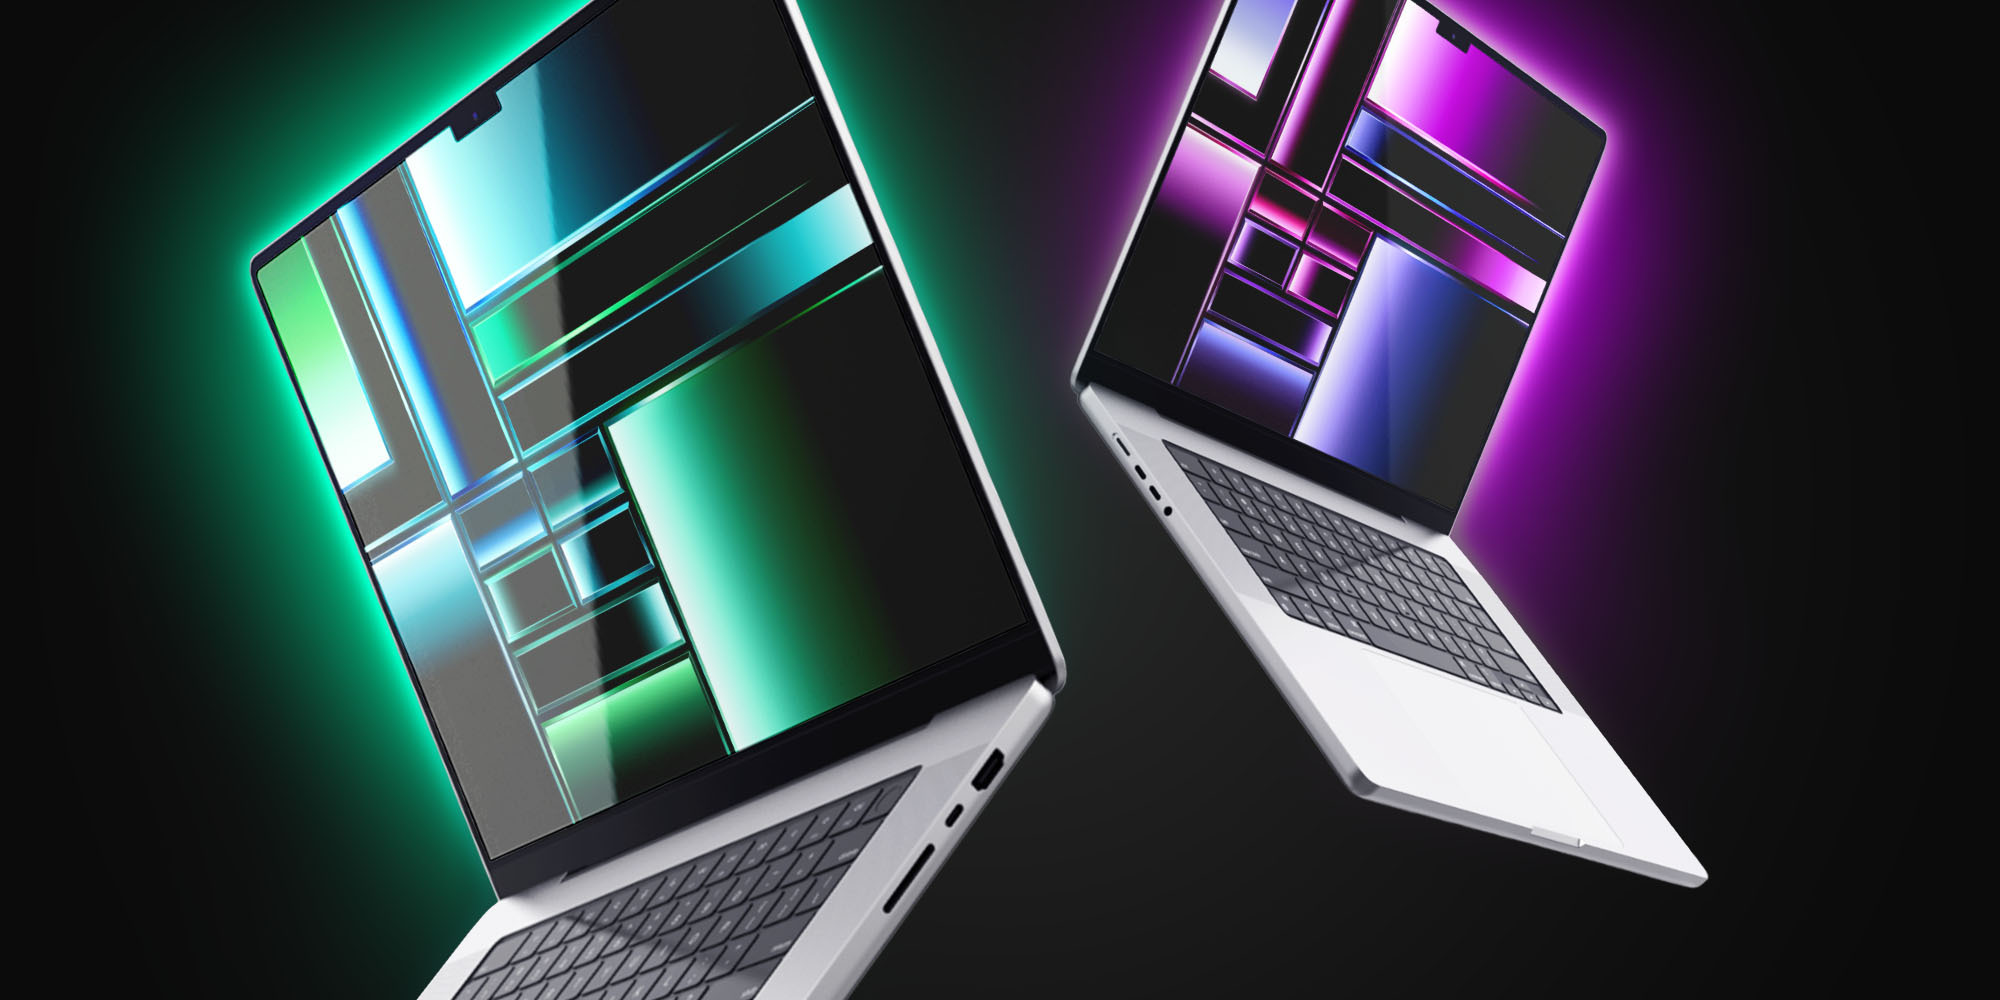 1000 Free Macbook  Laptop Images  Pixabay